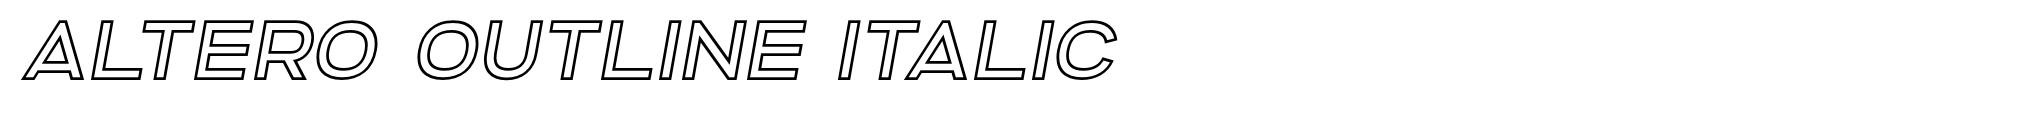 Altero Outline Italic image